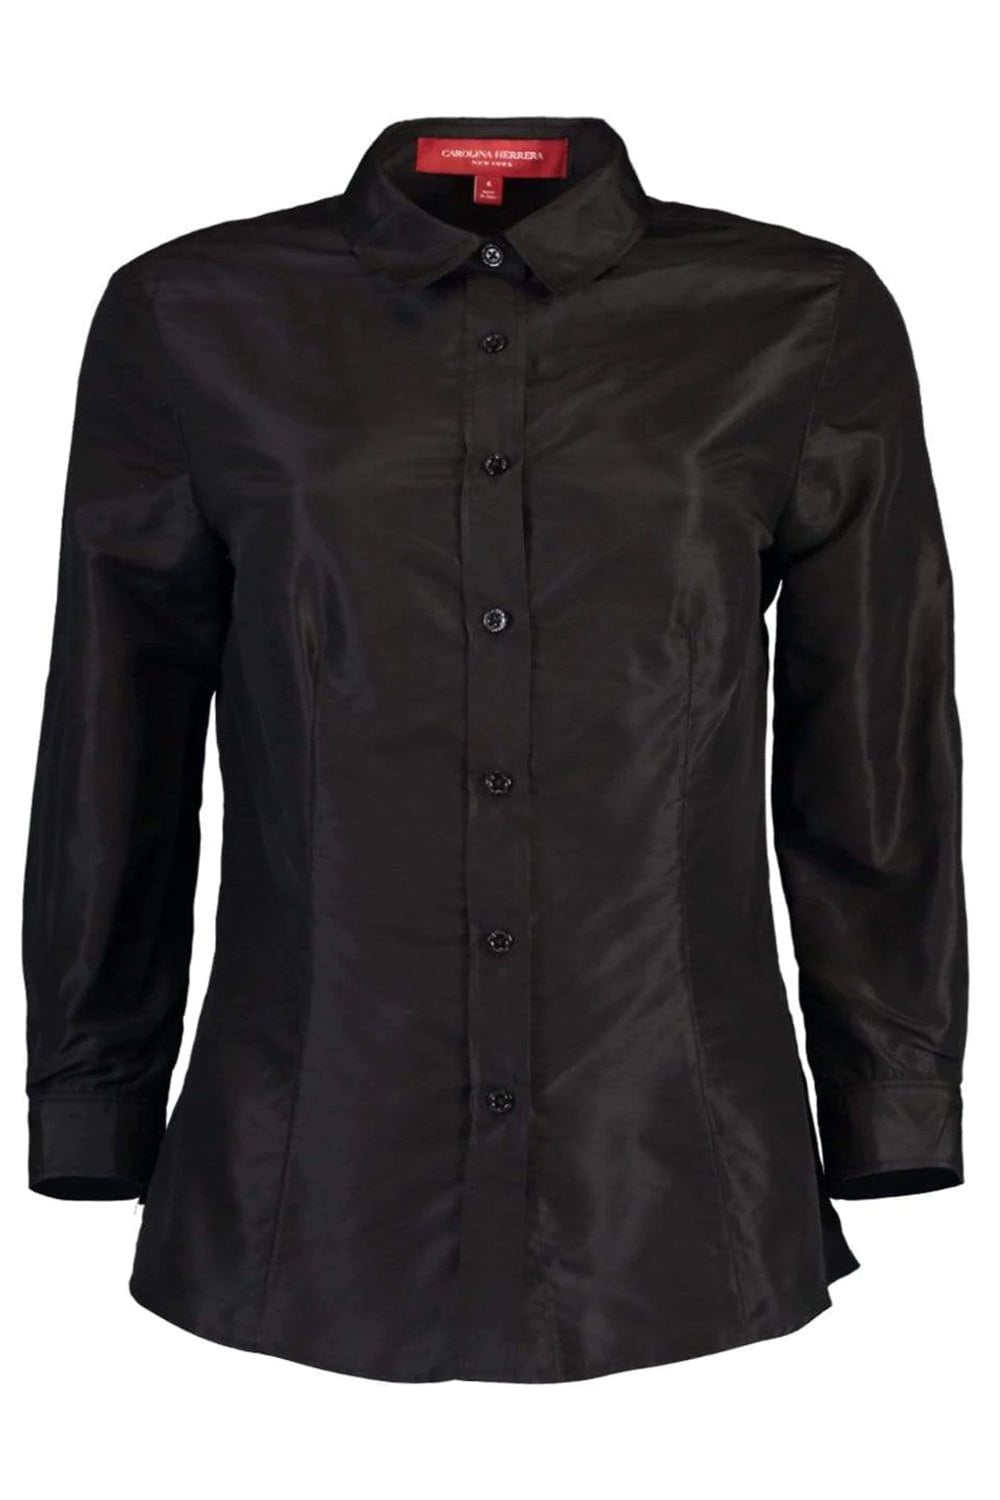 CAROLINA HERRERA-Silk Taffeta Collared Shirt - Black-